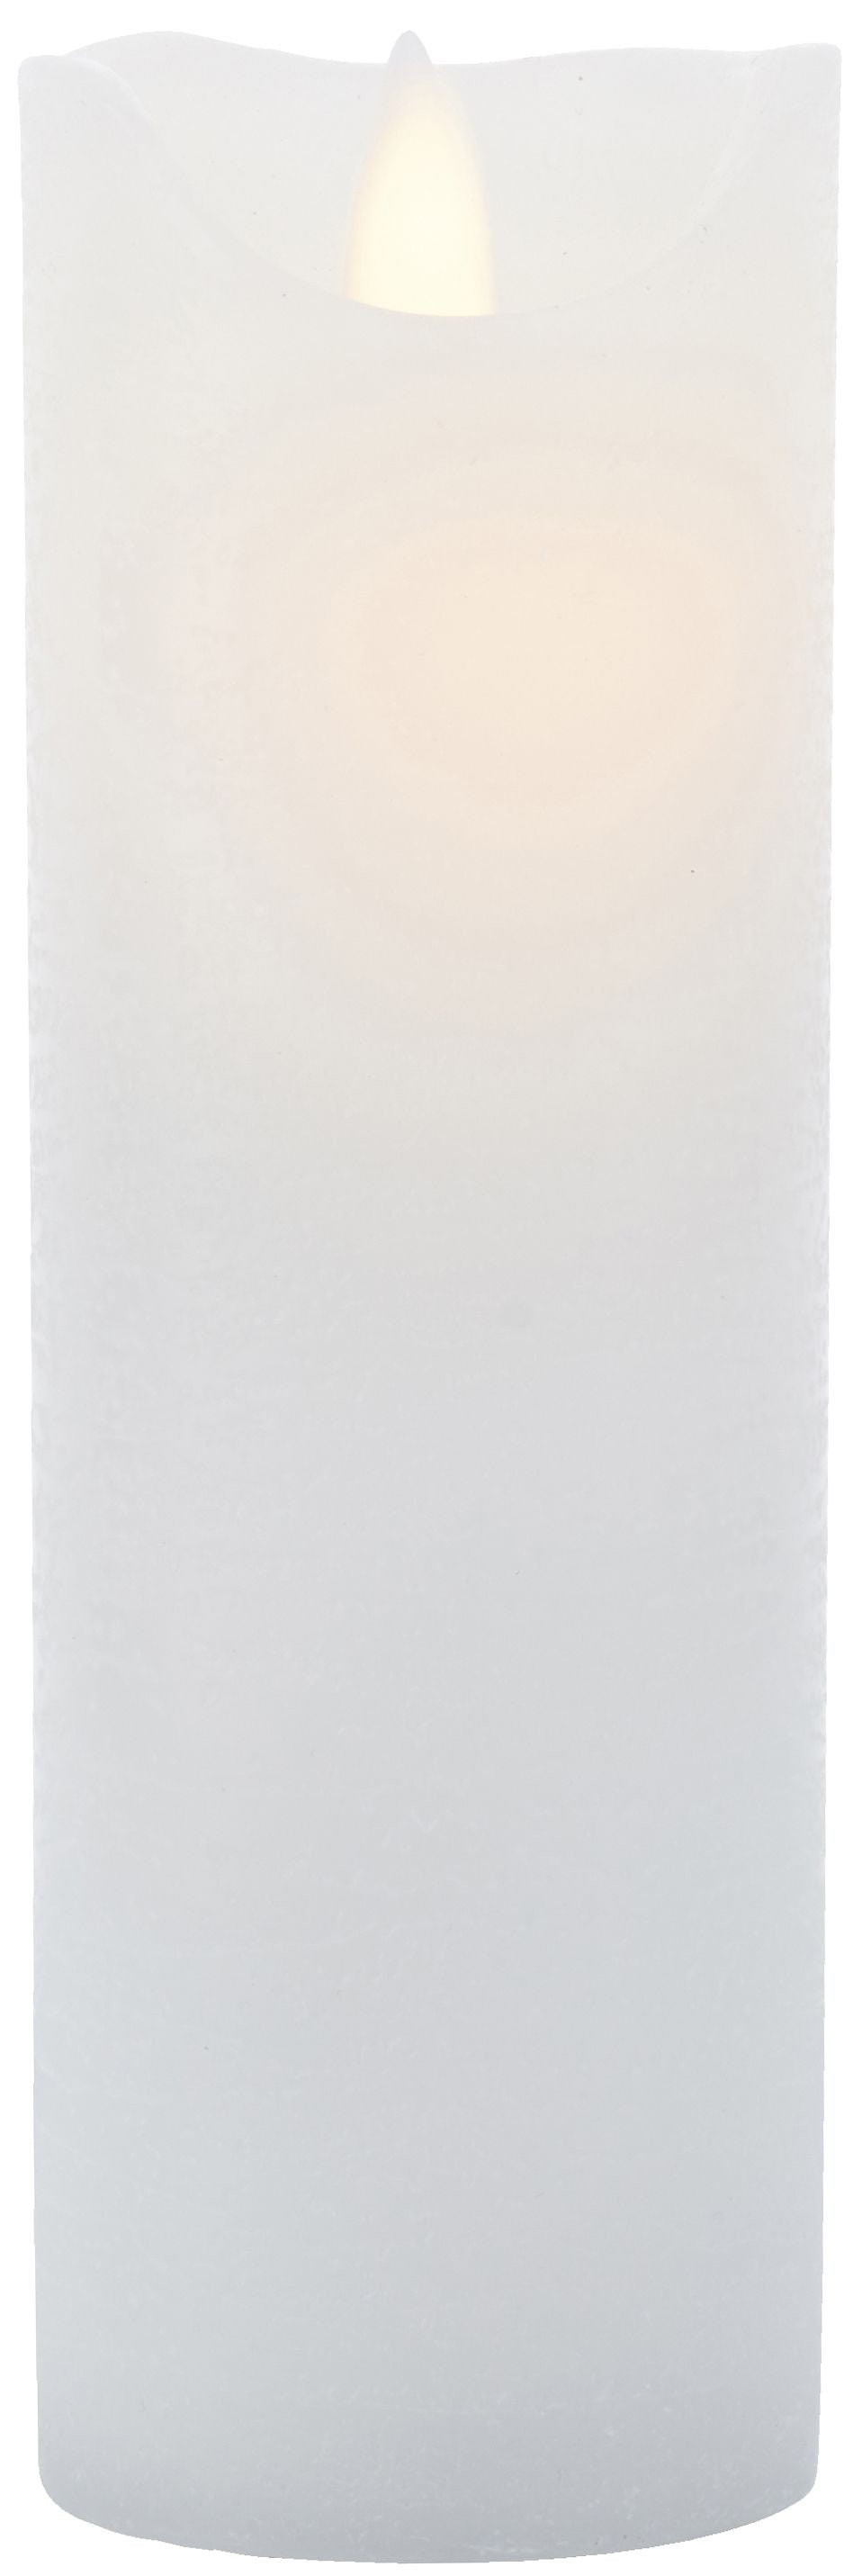 Sirius Sara oplaadbaar Led Candle White, Ø7,5x H20cm